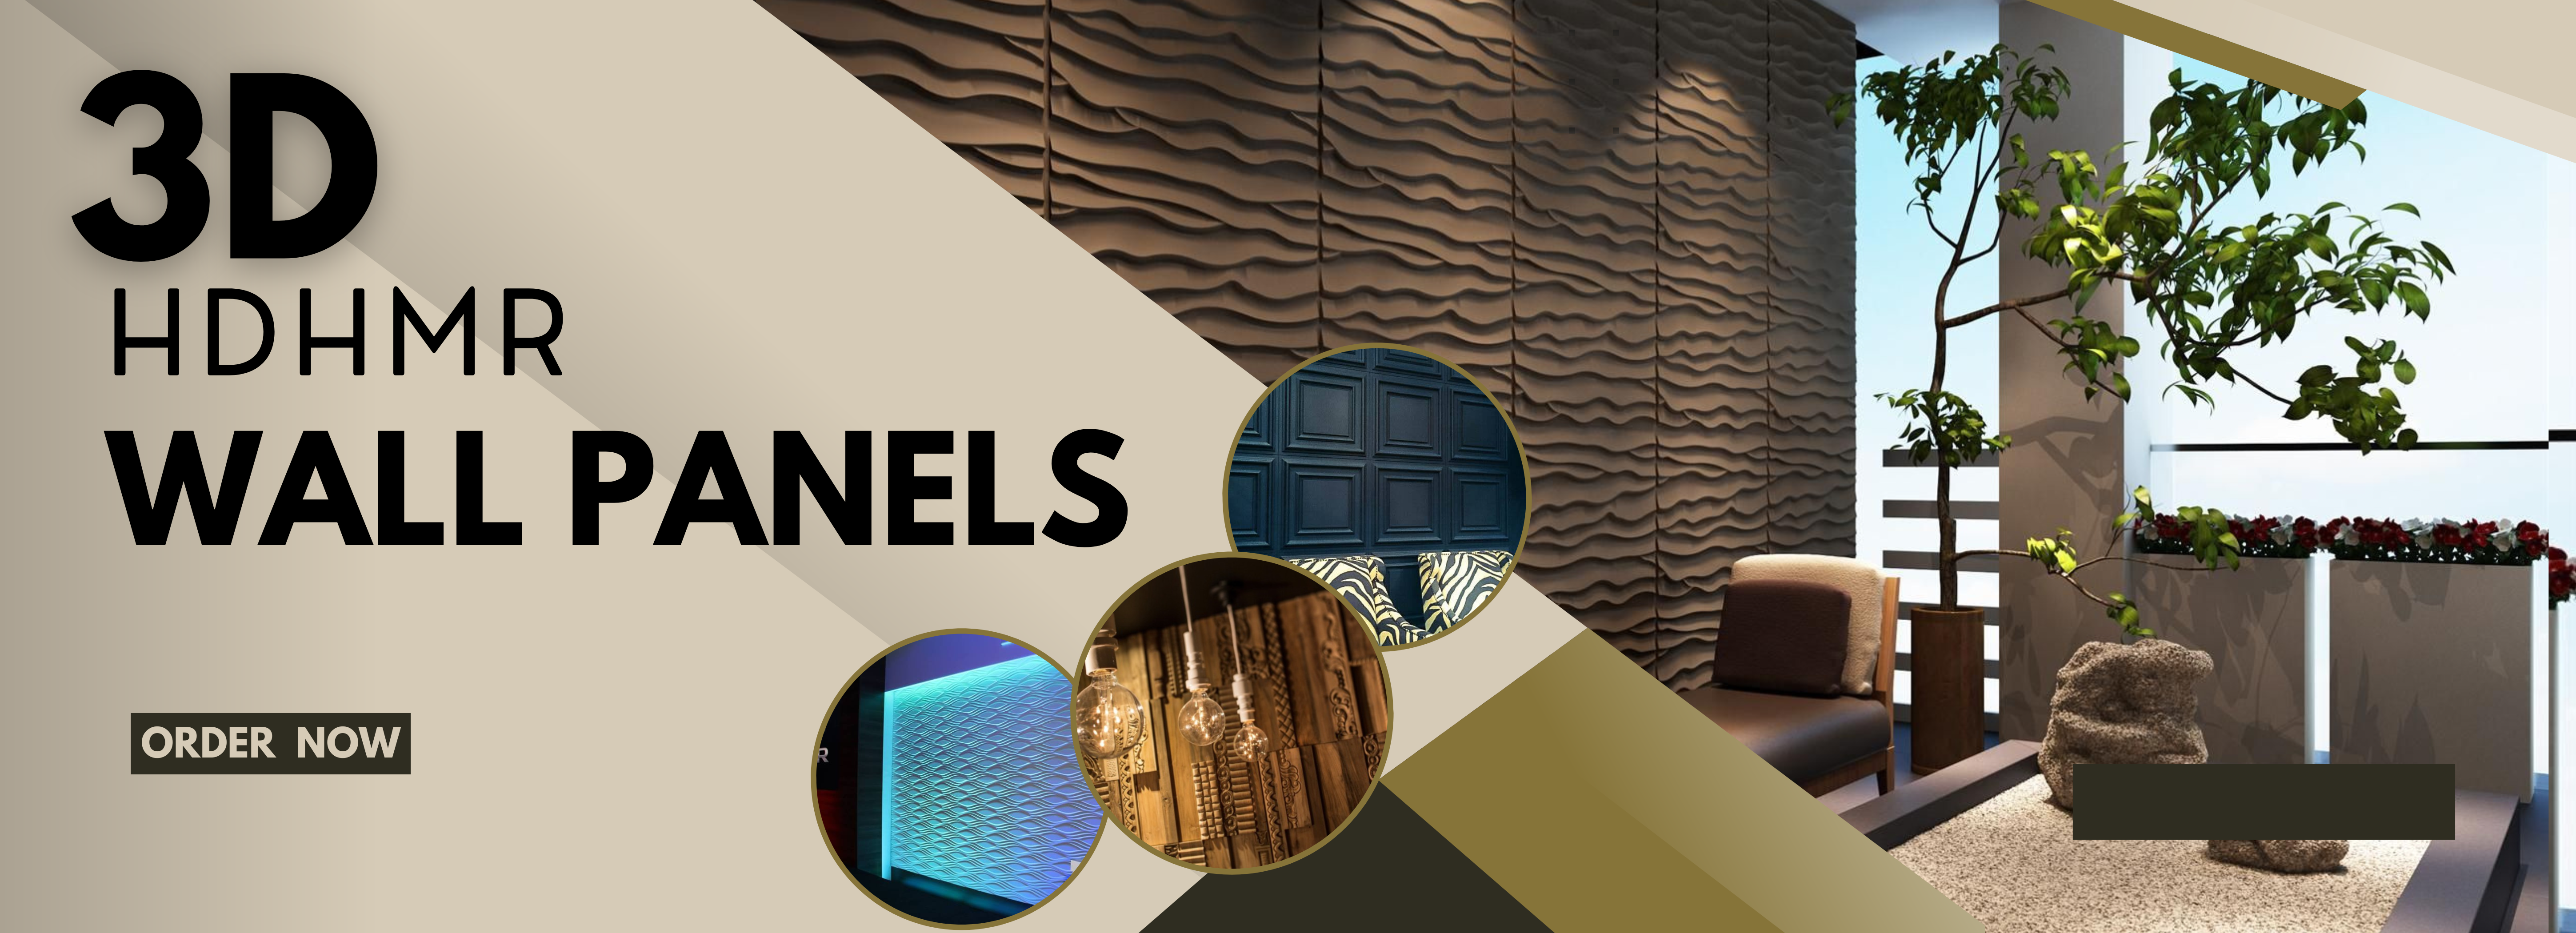 3D HDHMR Wall Panels